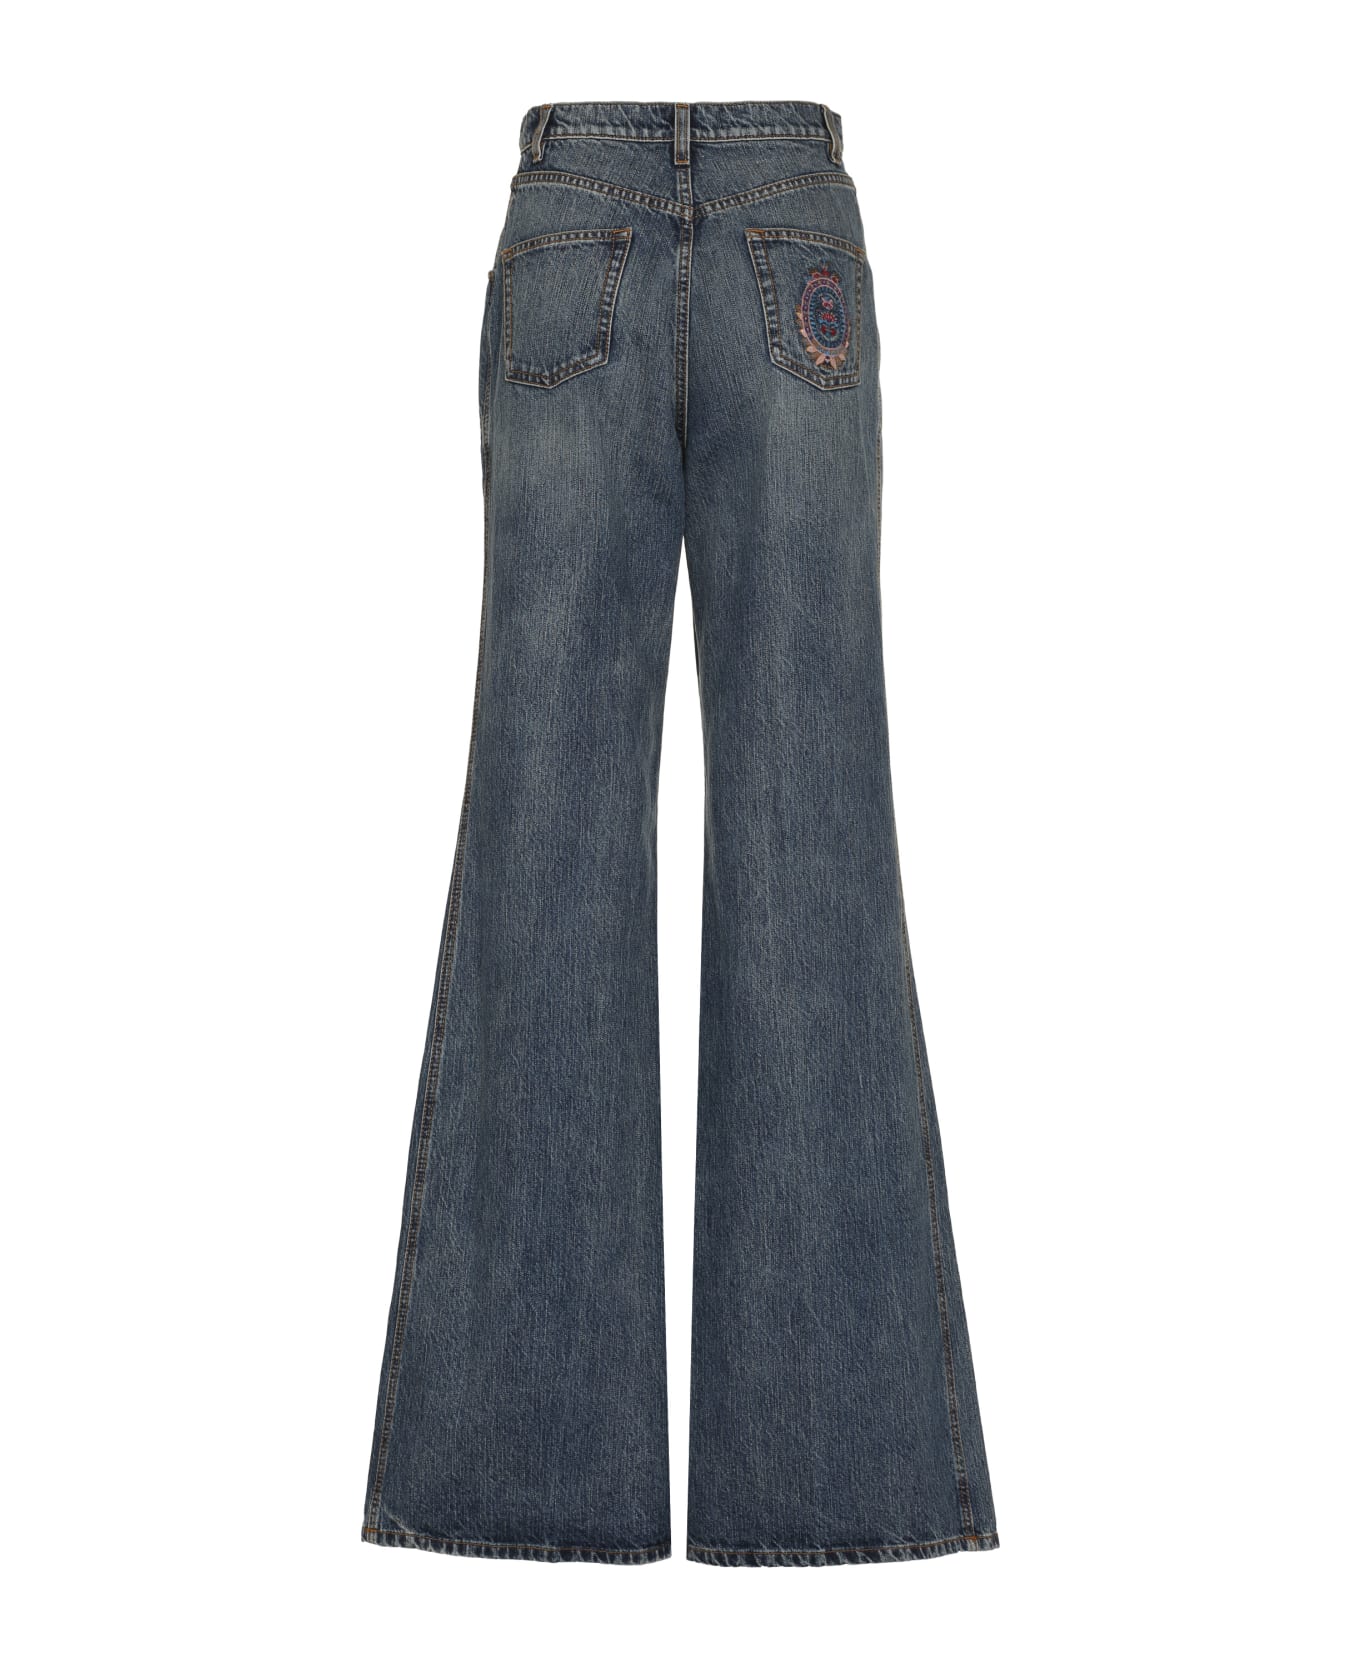 Etro High-rise Flared Jeans - Denim